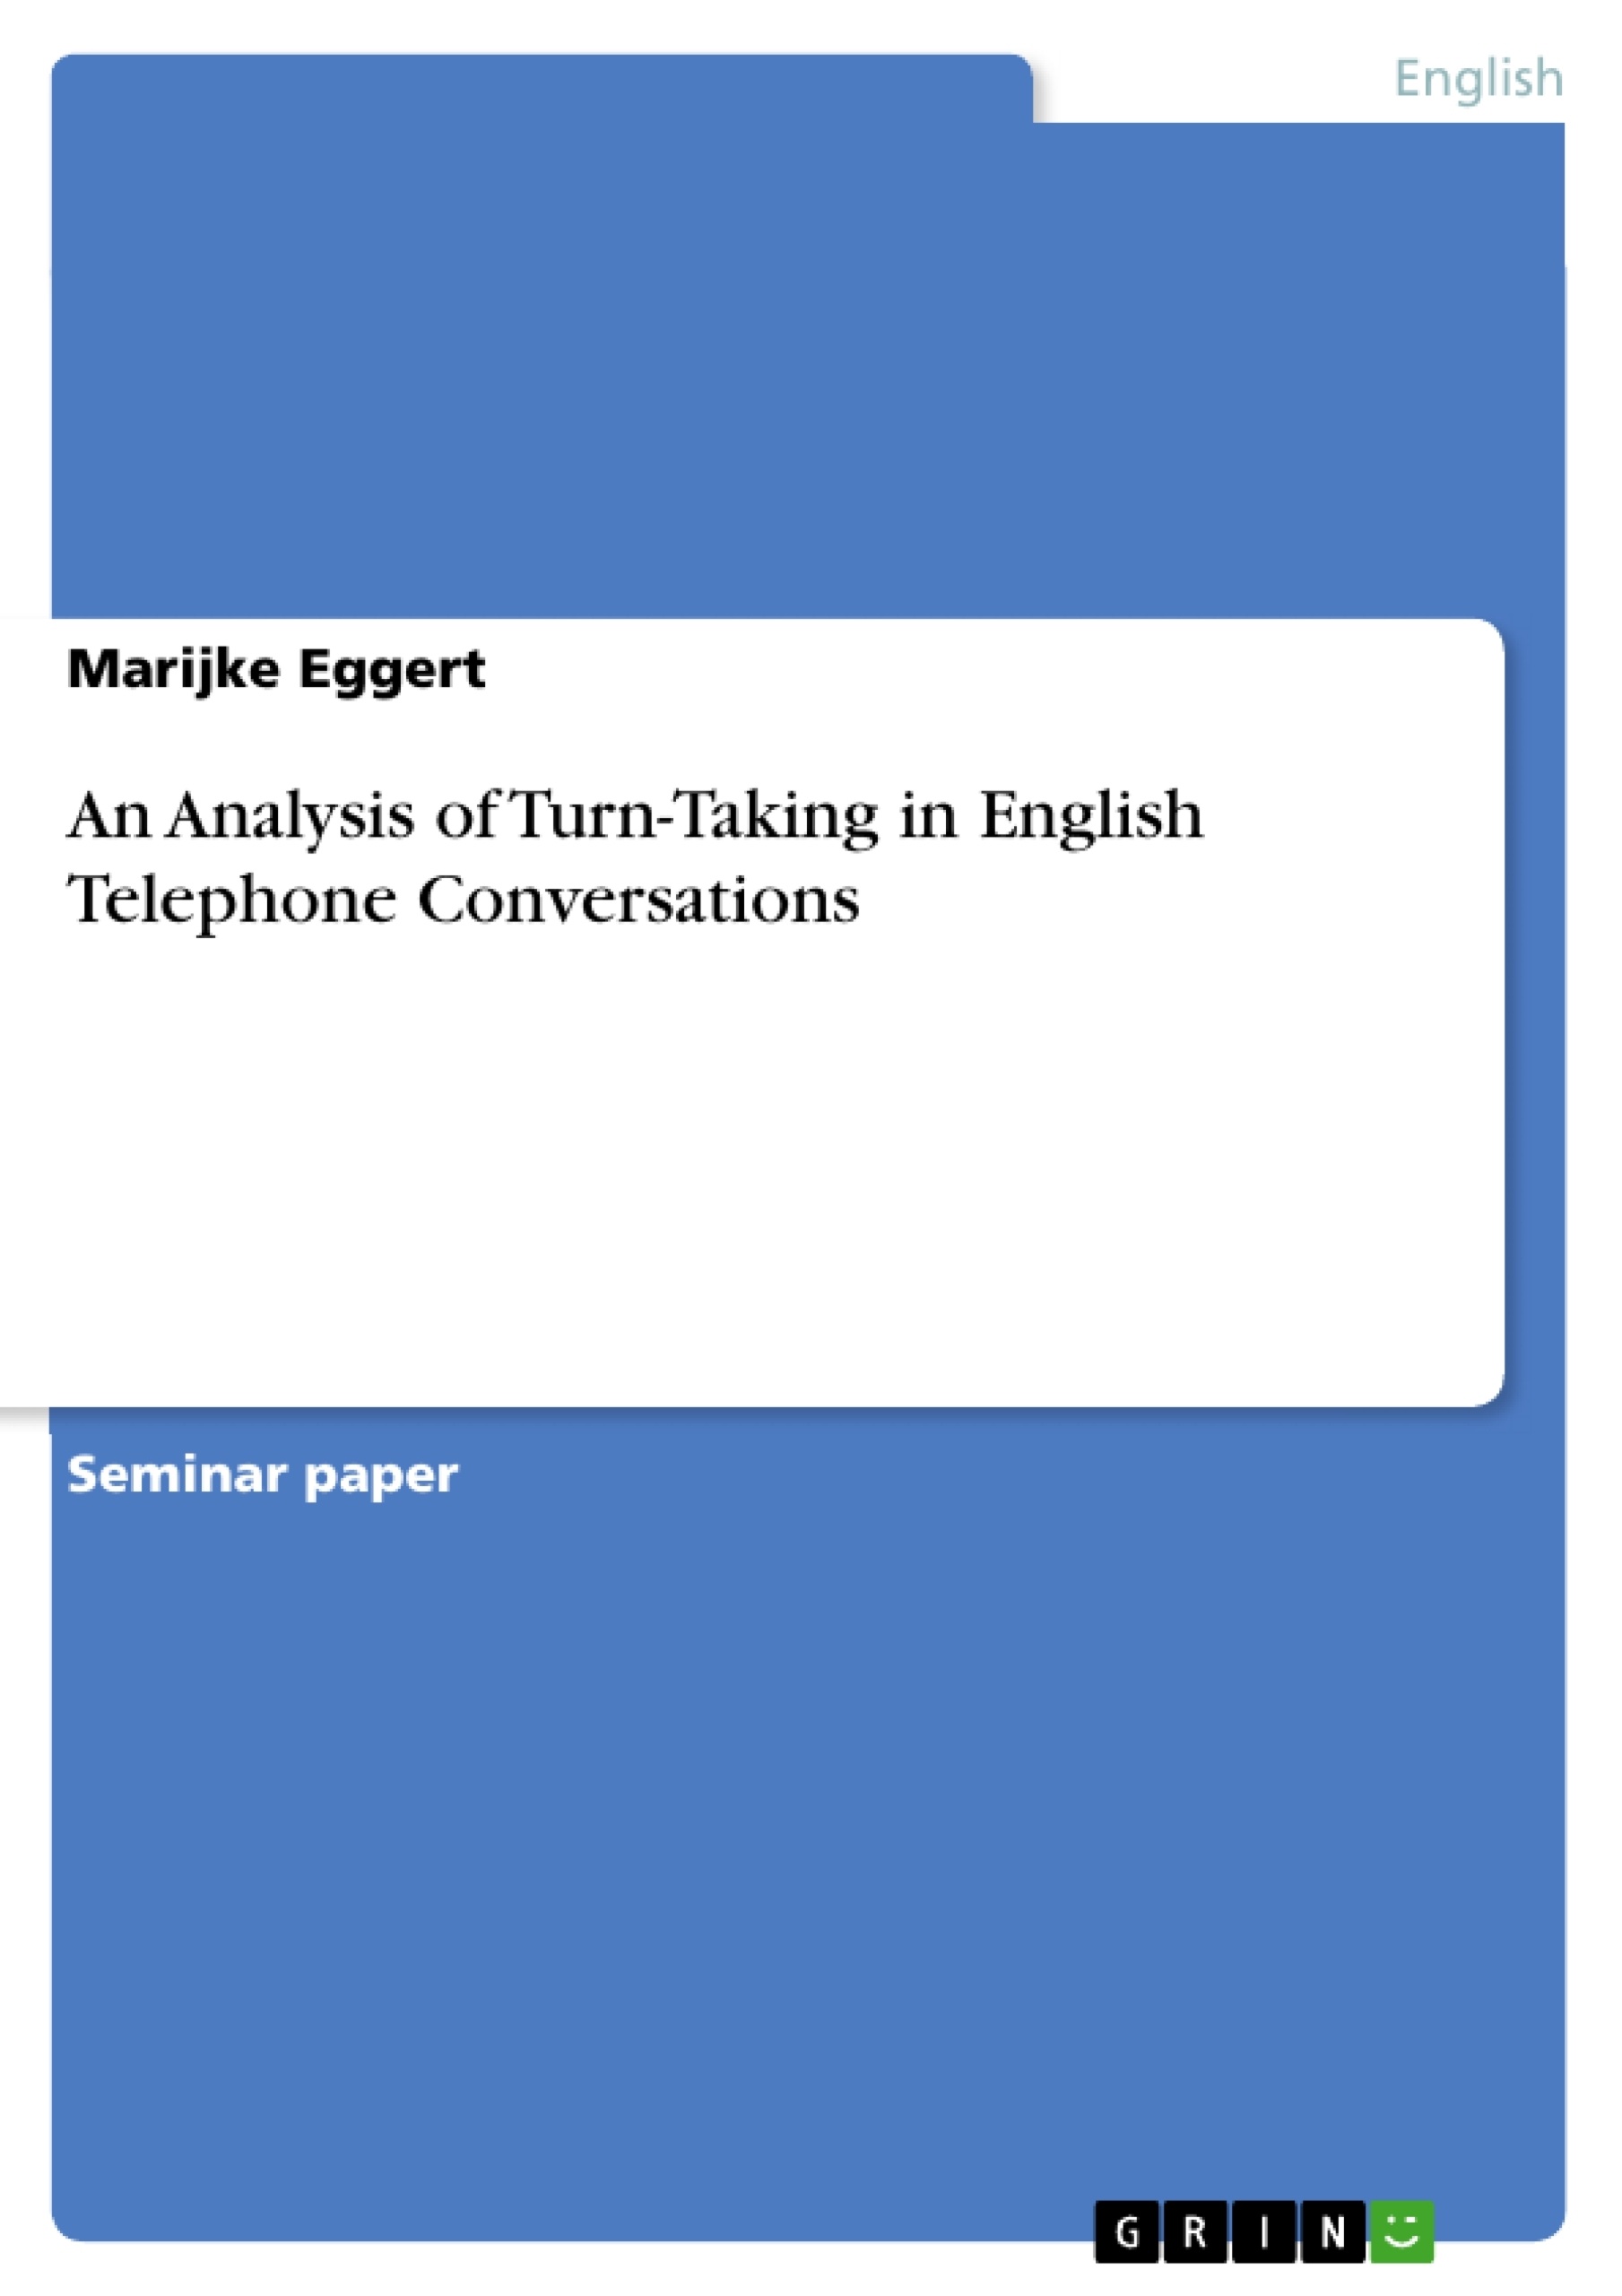 Telephone conversation dialogue essay